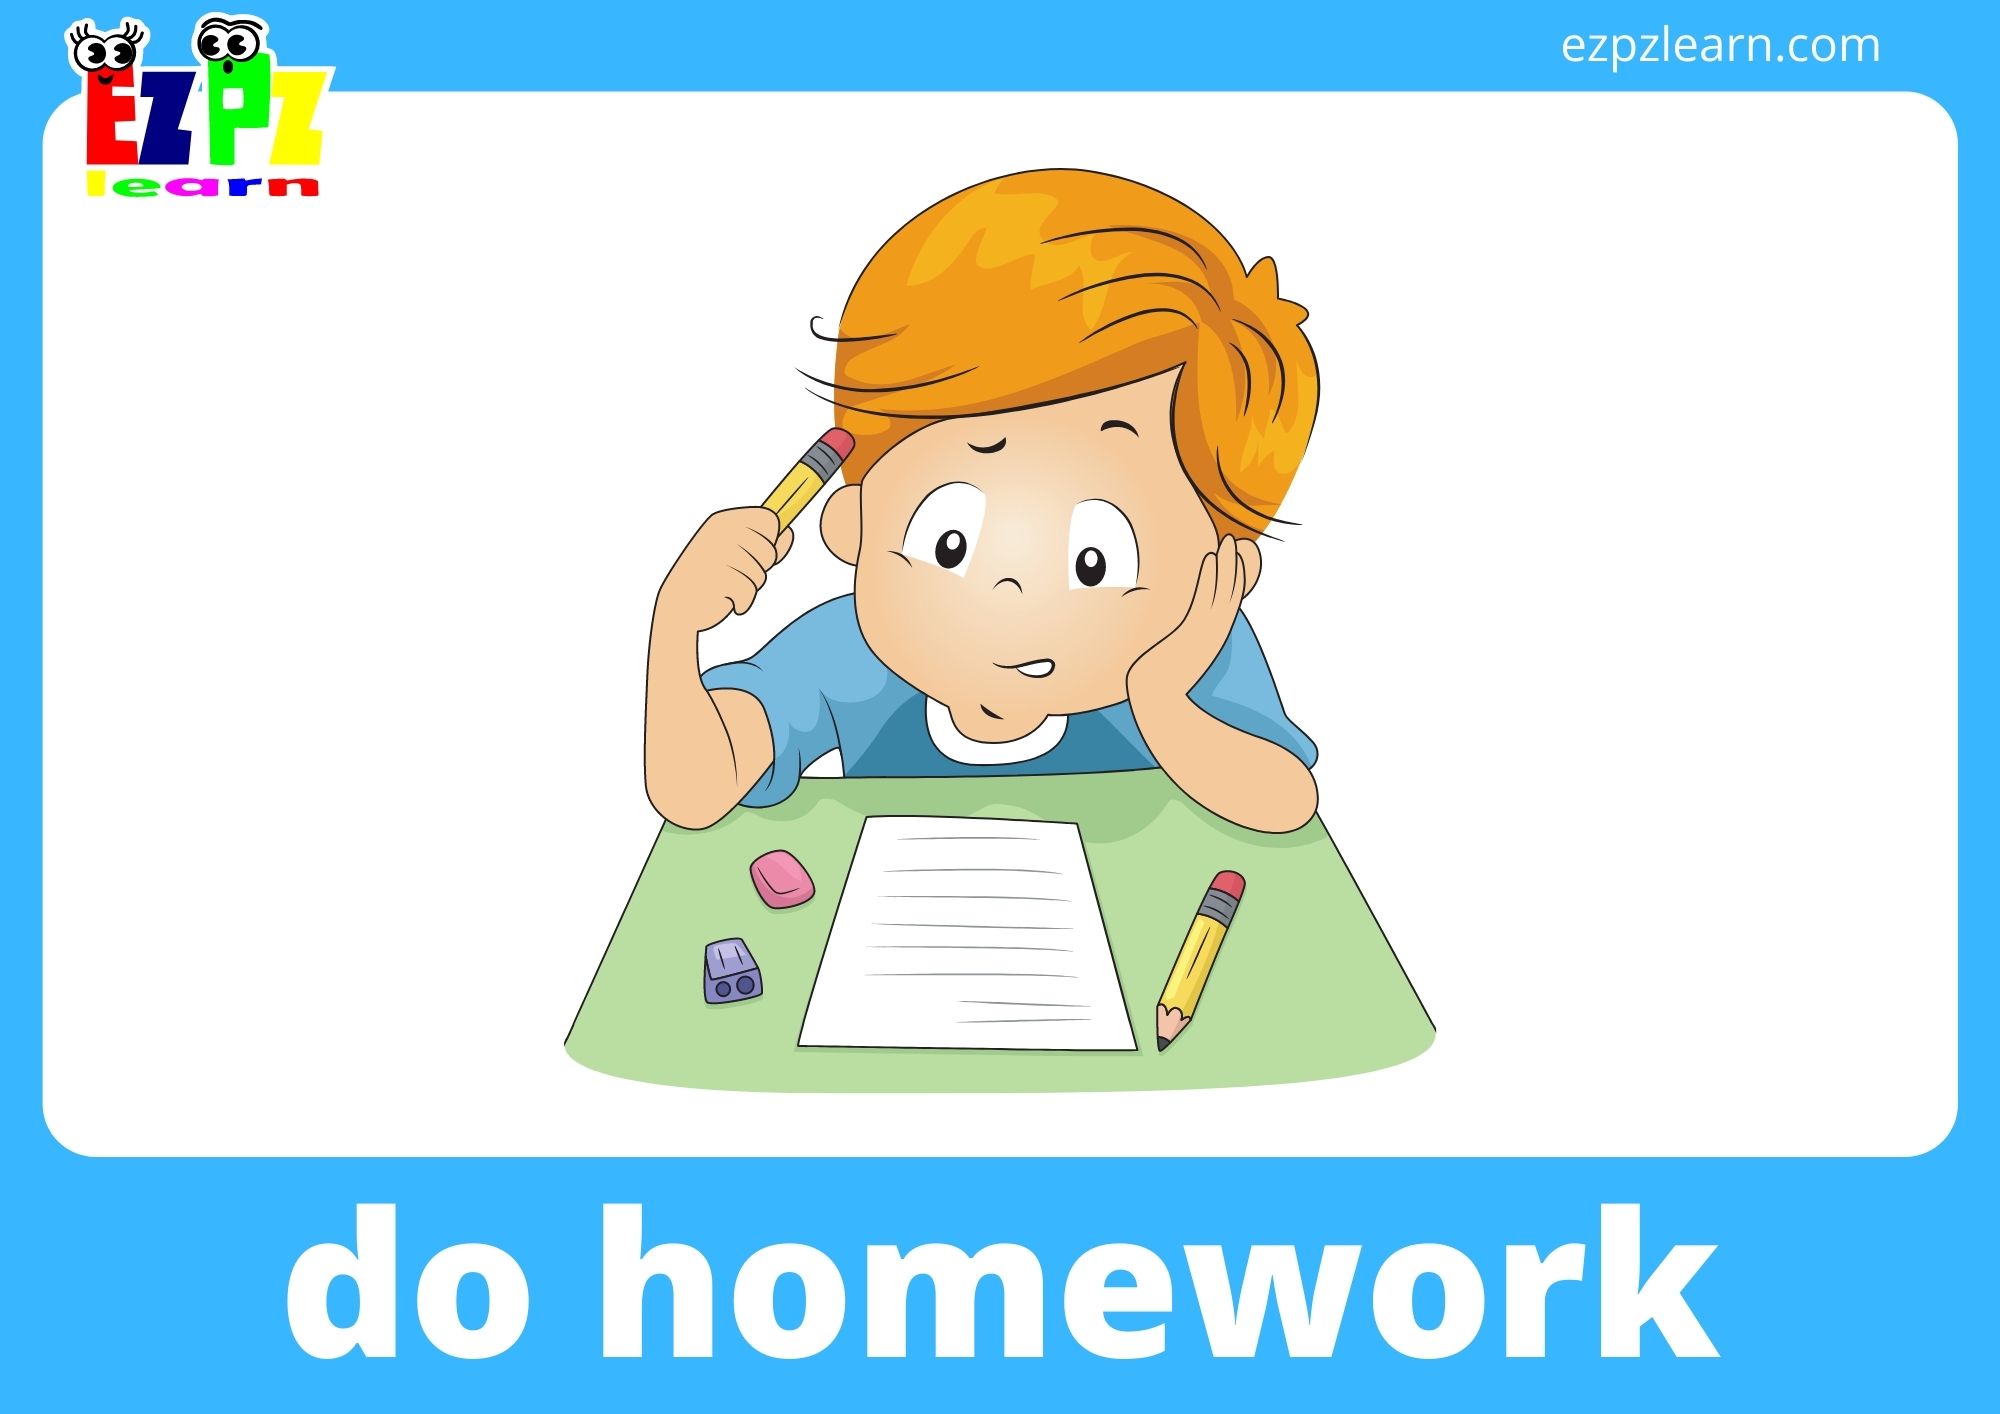 homework verb